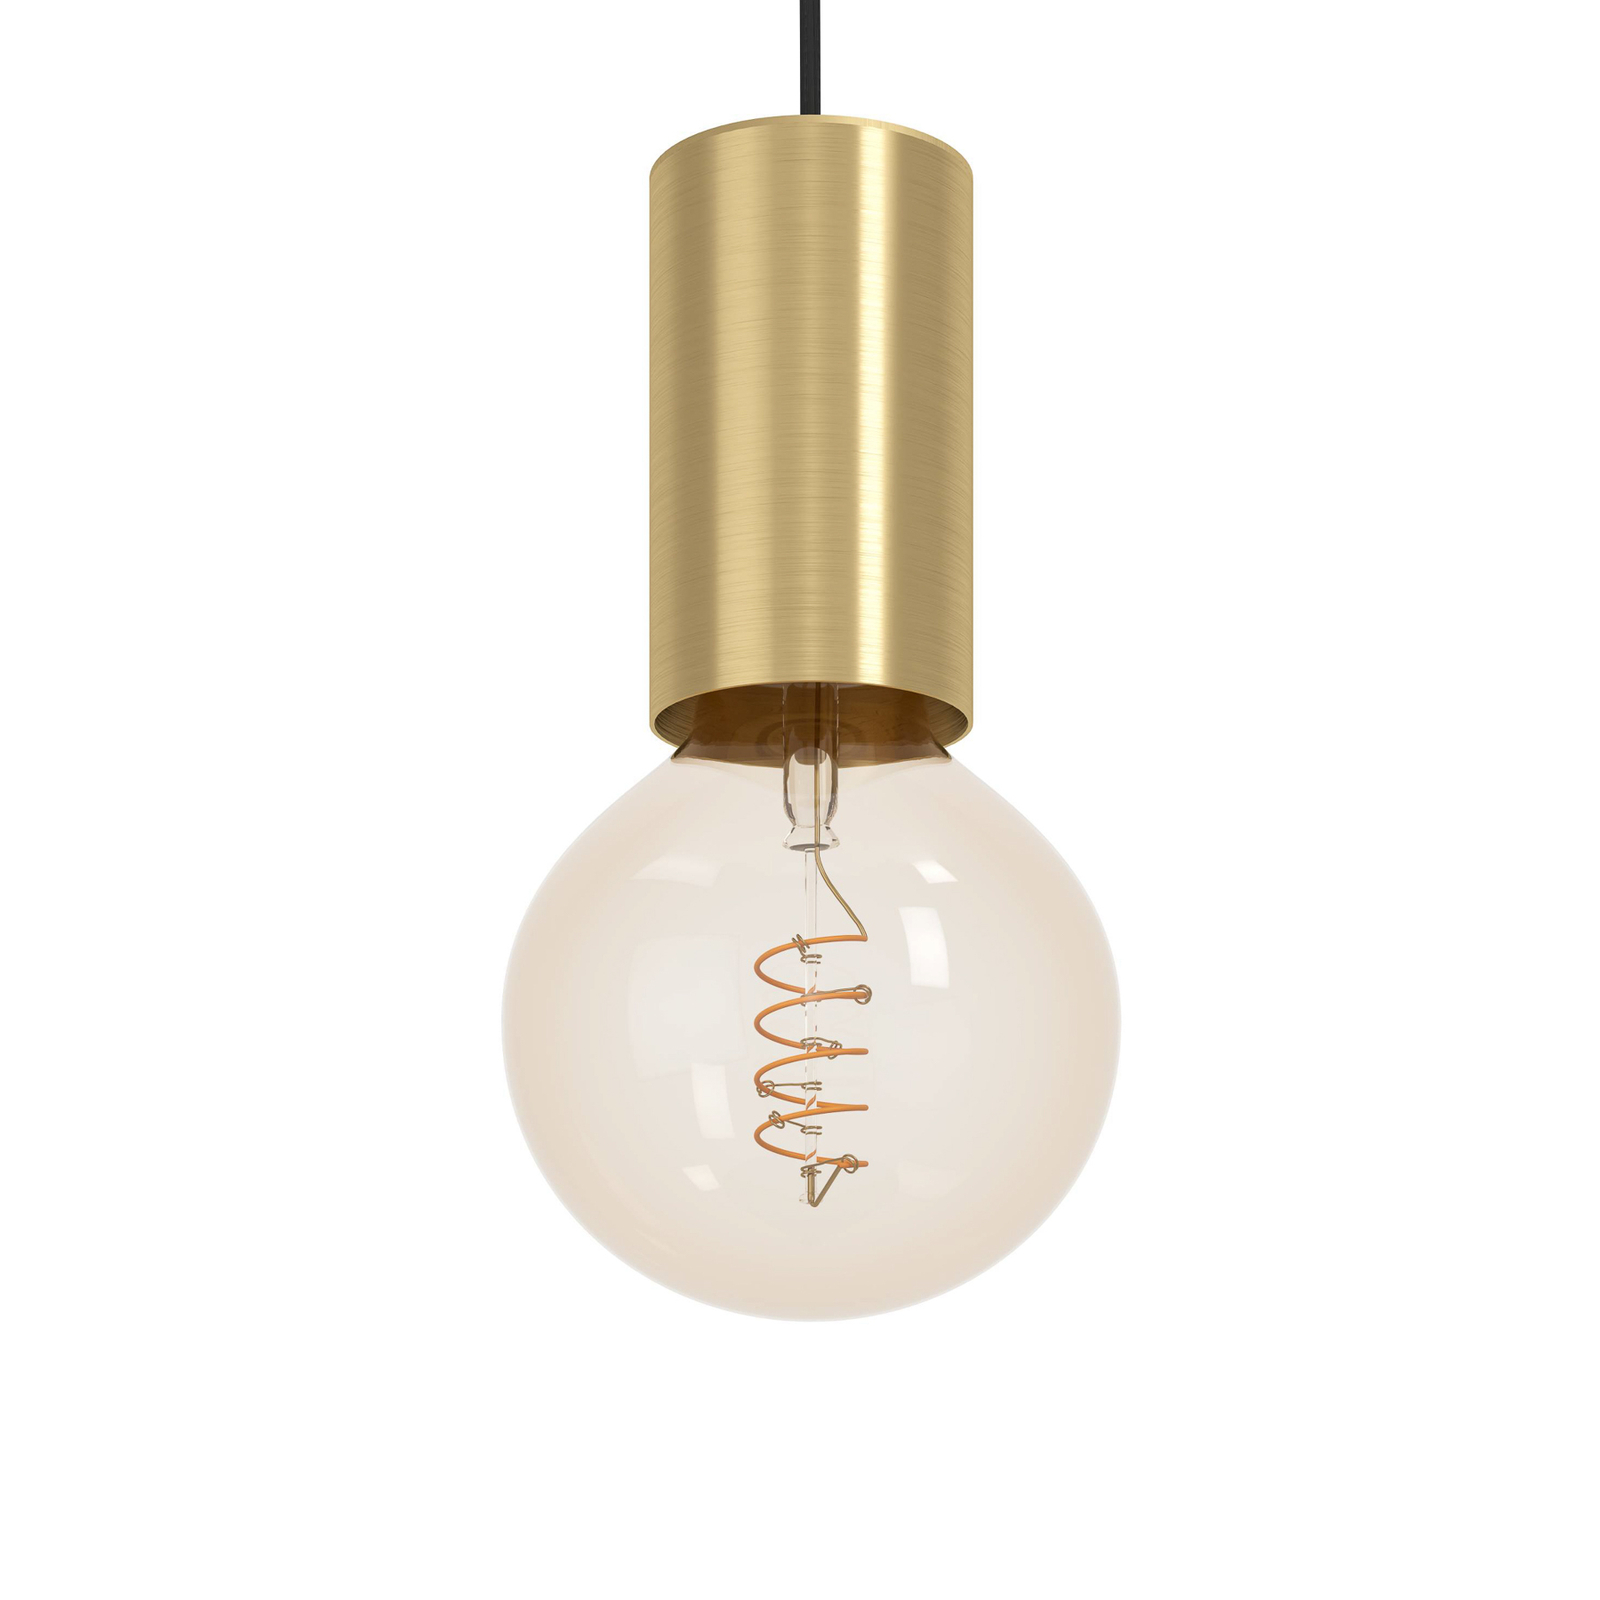 Pozueta 1 pendant light, 1-bulb, brass